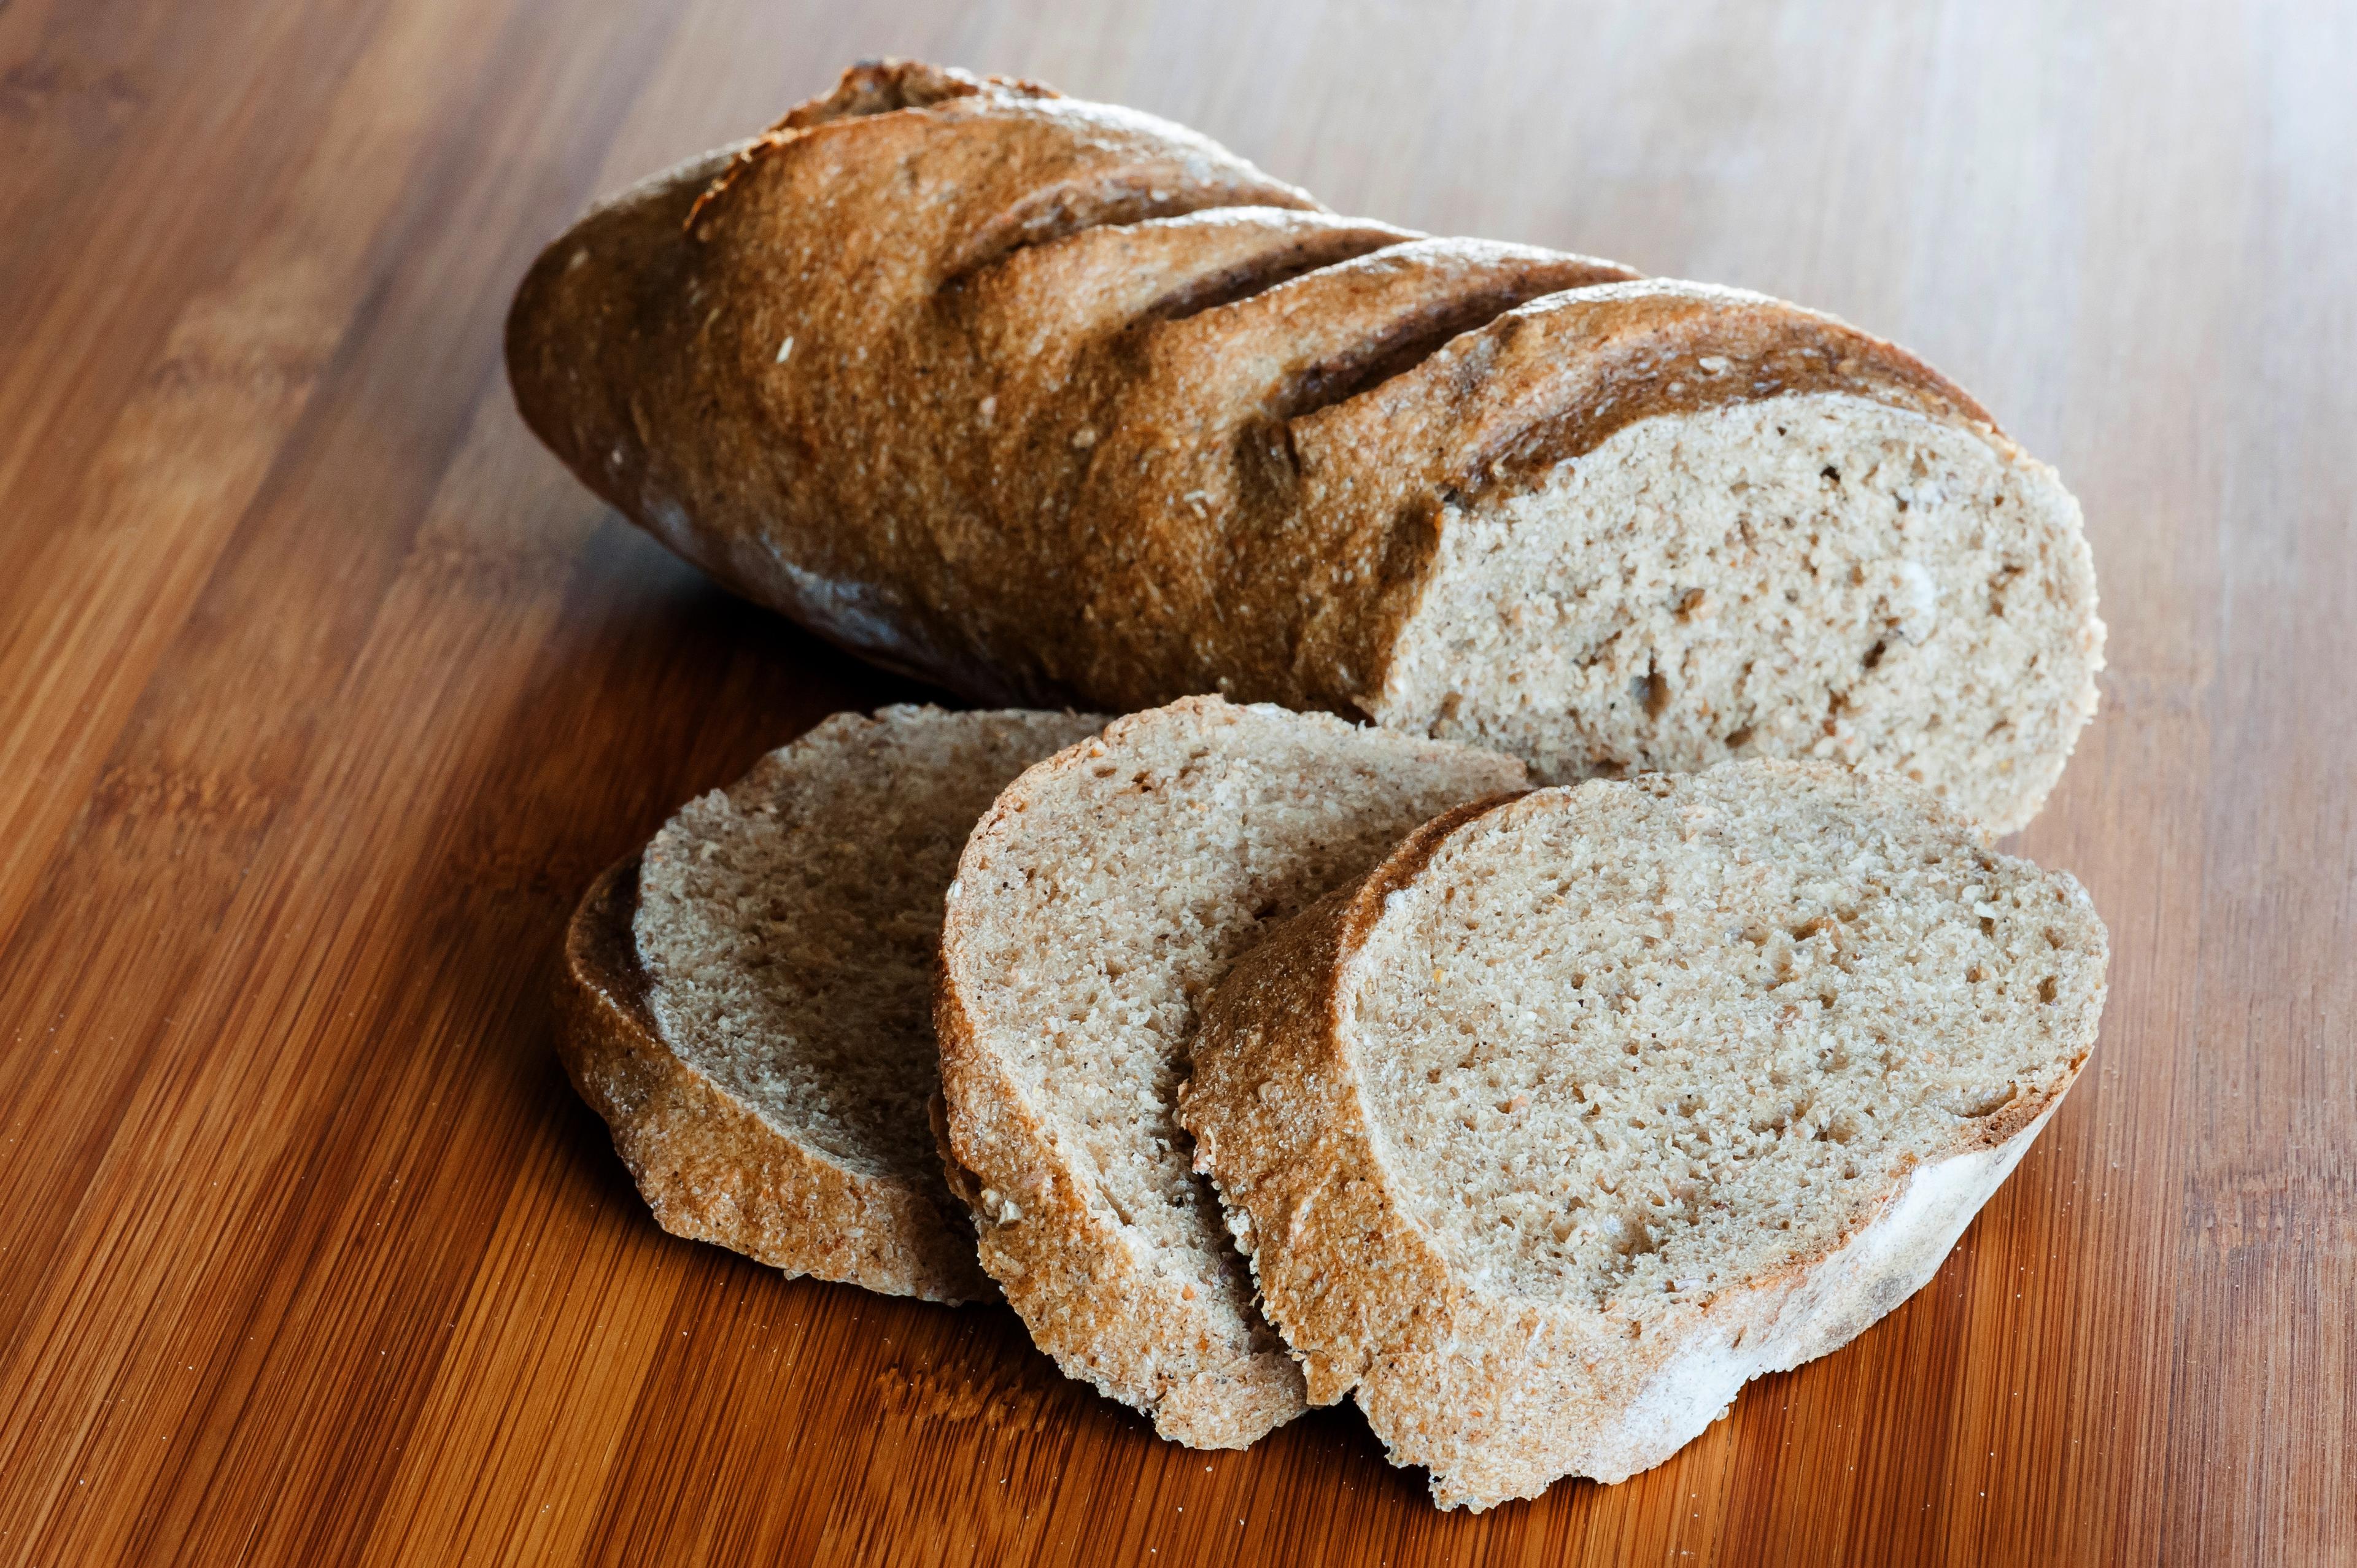 Chleb pszenno-żytni na zakwasie